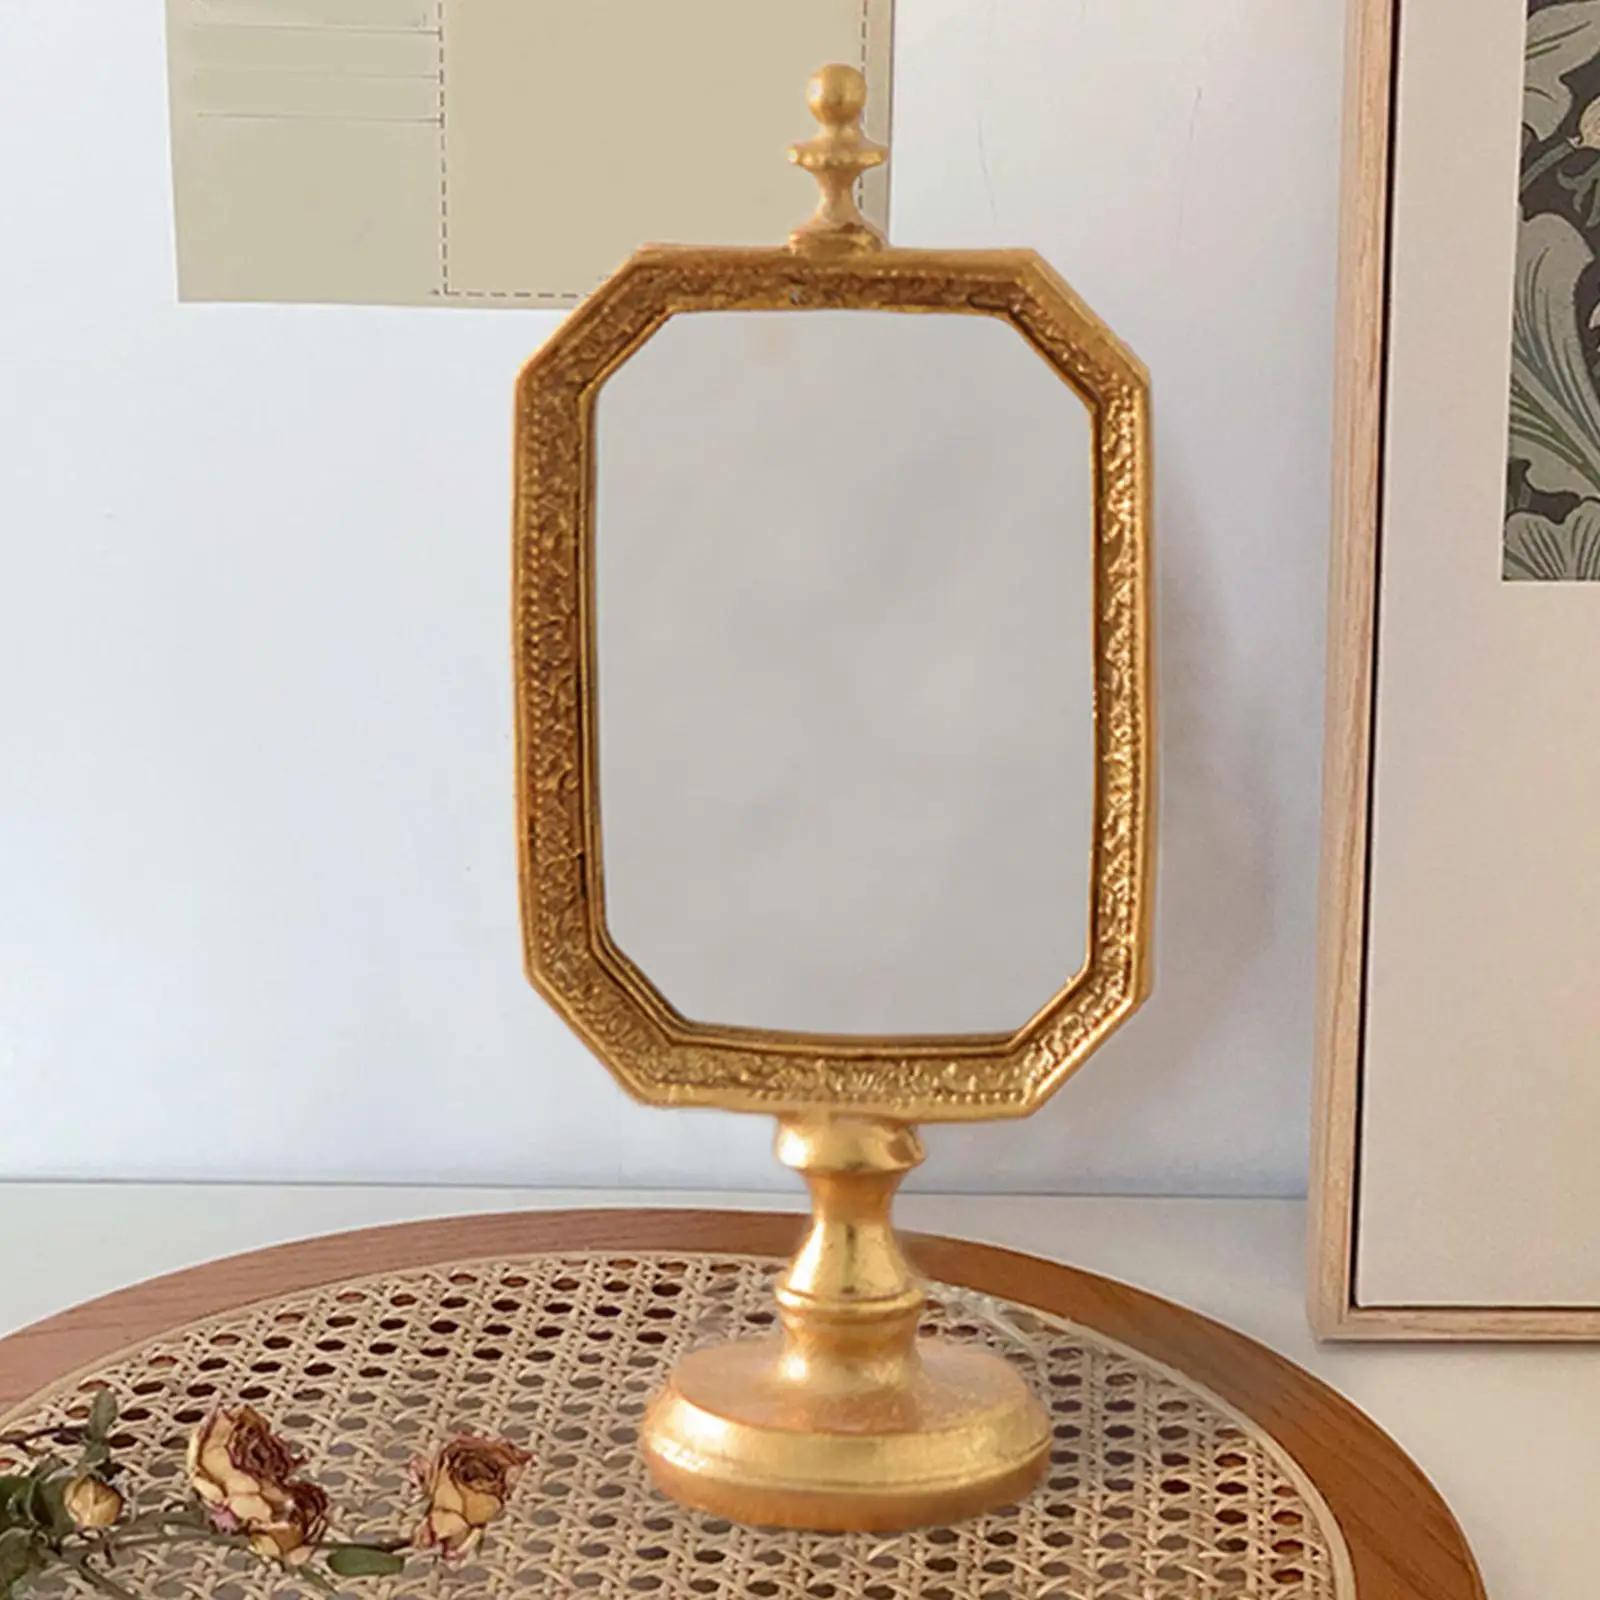 Antique Style Makeup Mirror Dresser Counter Display Tabletop Mirror Cosmtic Mirror Vanity Mirror for Tabletop Bedroom Hotel Home